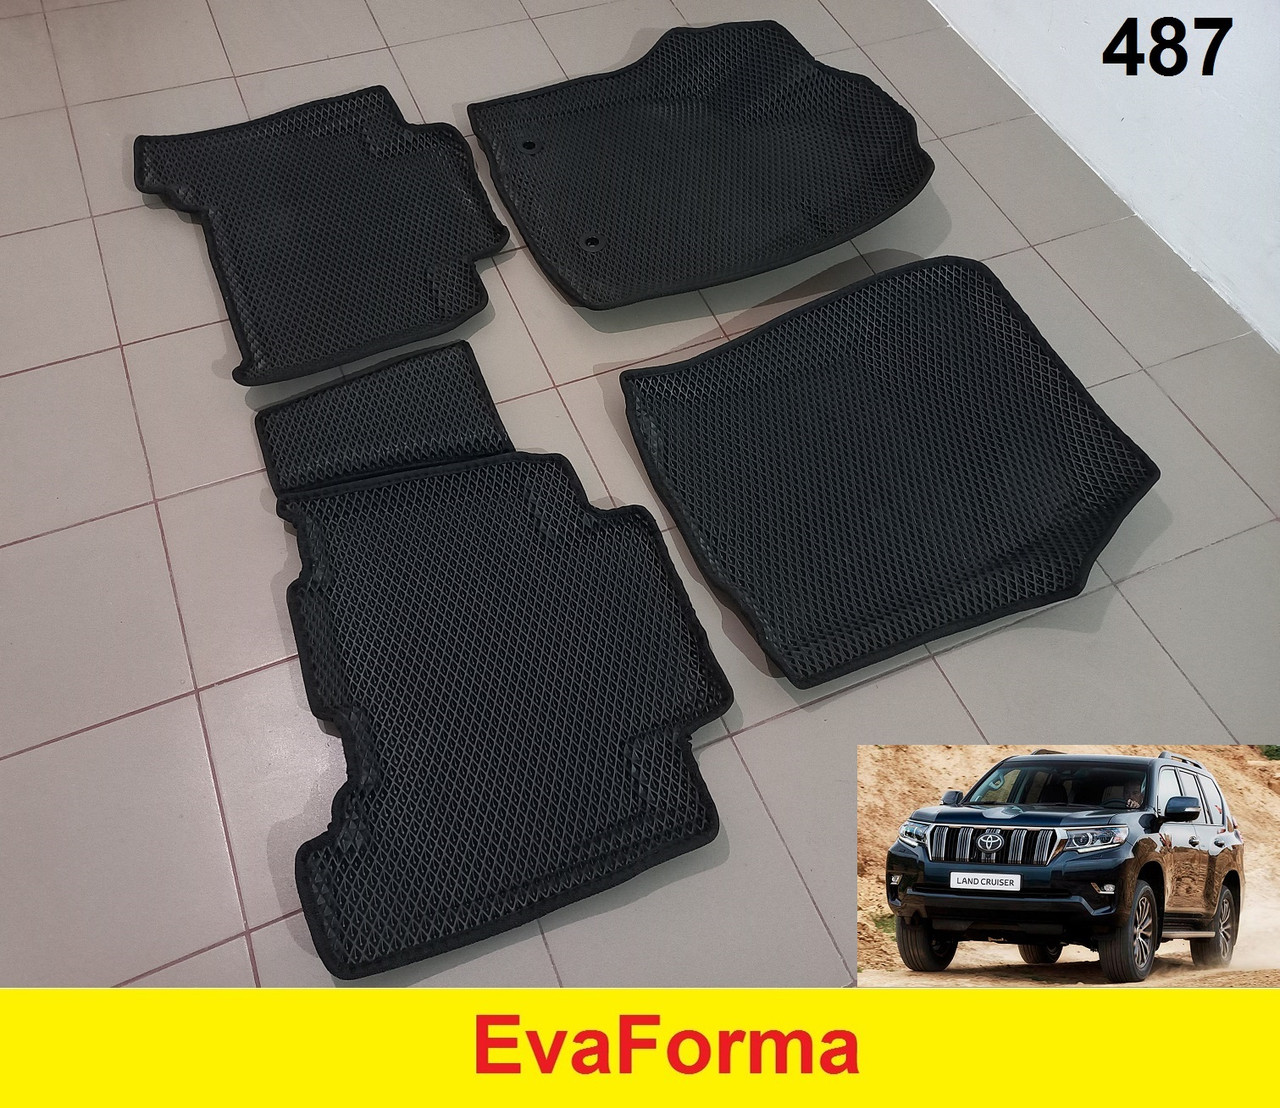 3D килимки EvaForma на Toyota LC Prado 150 '18-, килимки ЕВА